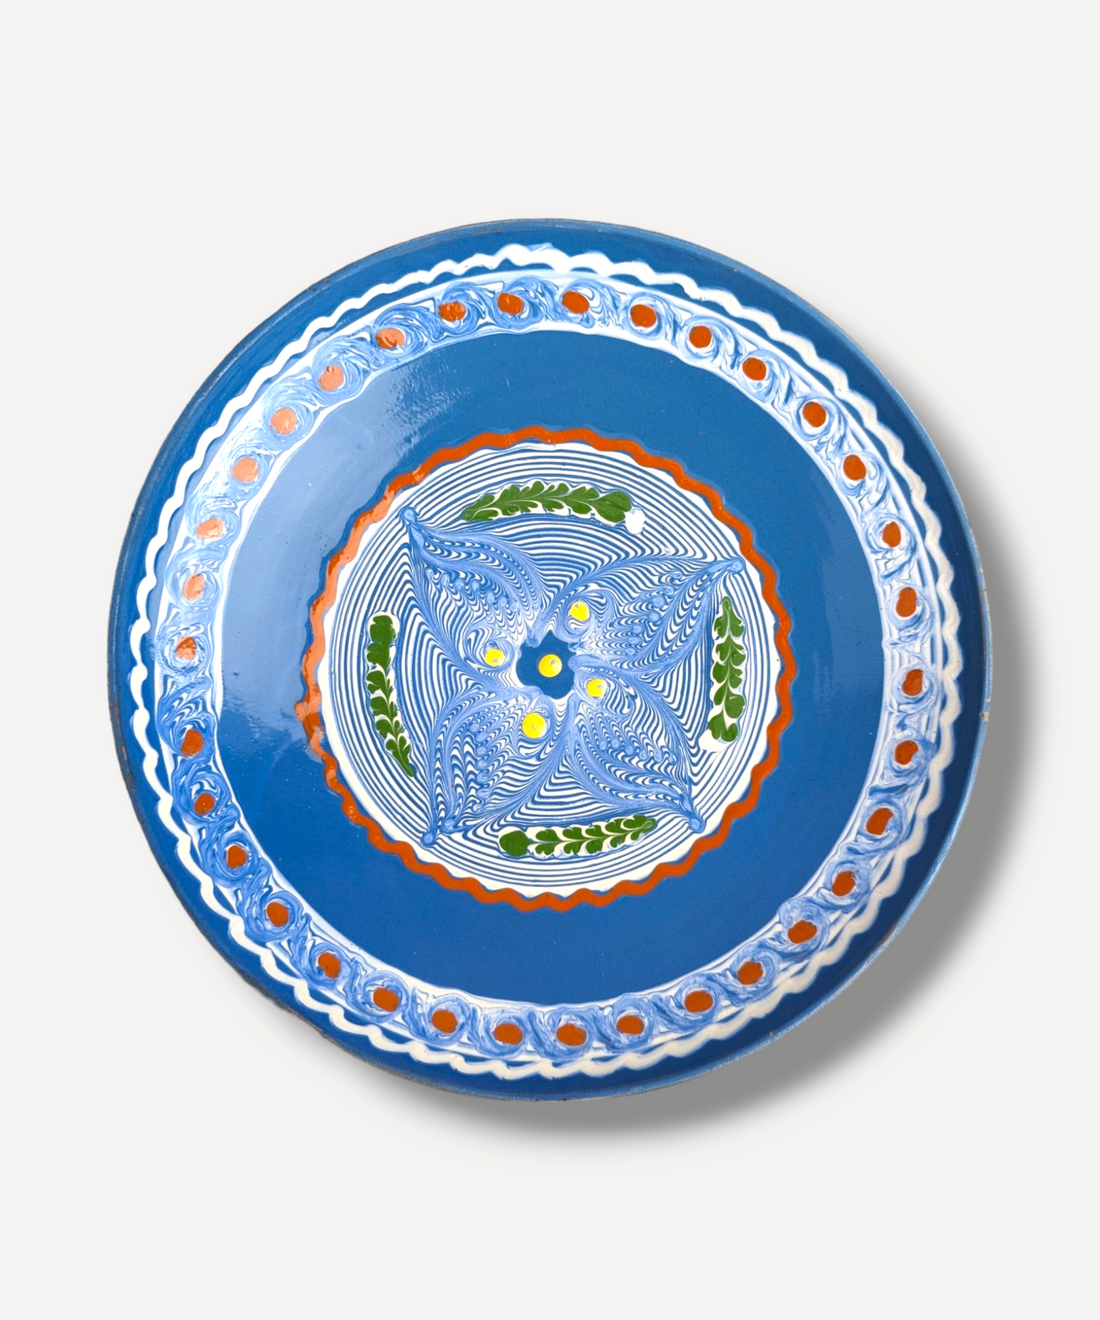 Large Soft Blue Servings Dish. II